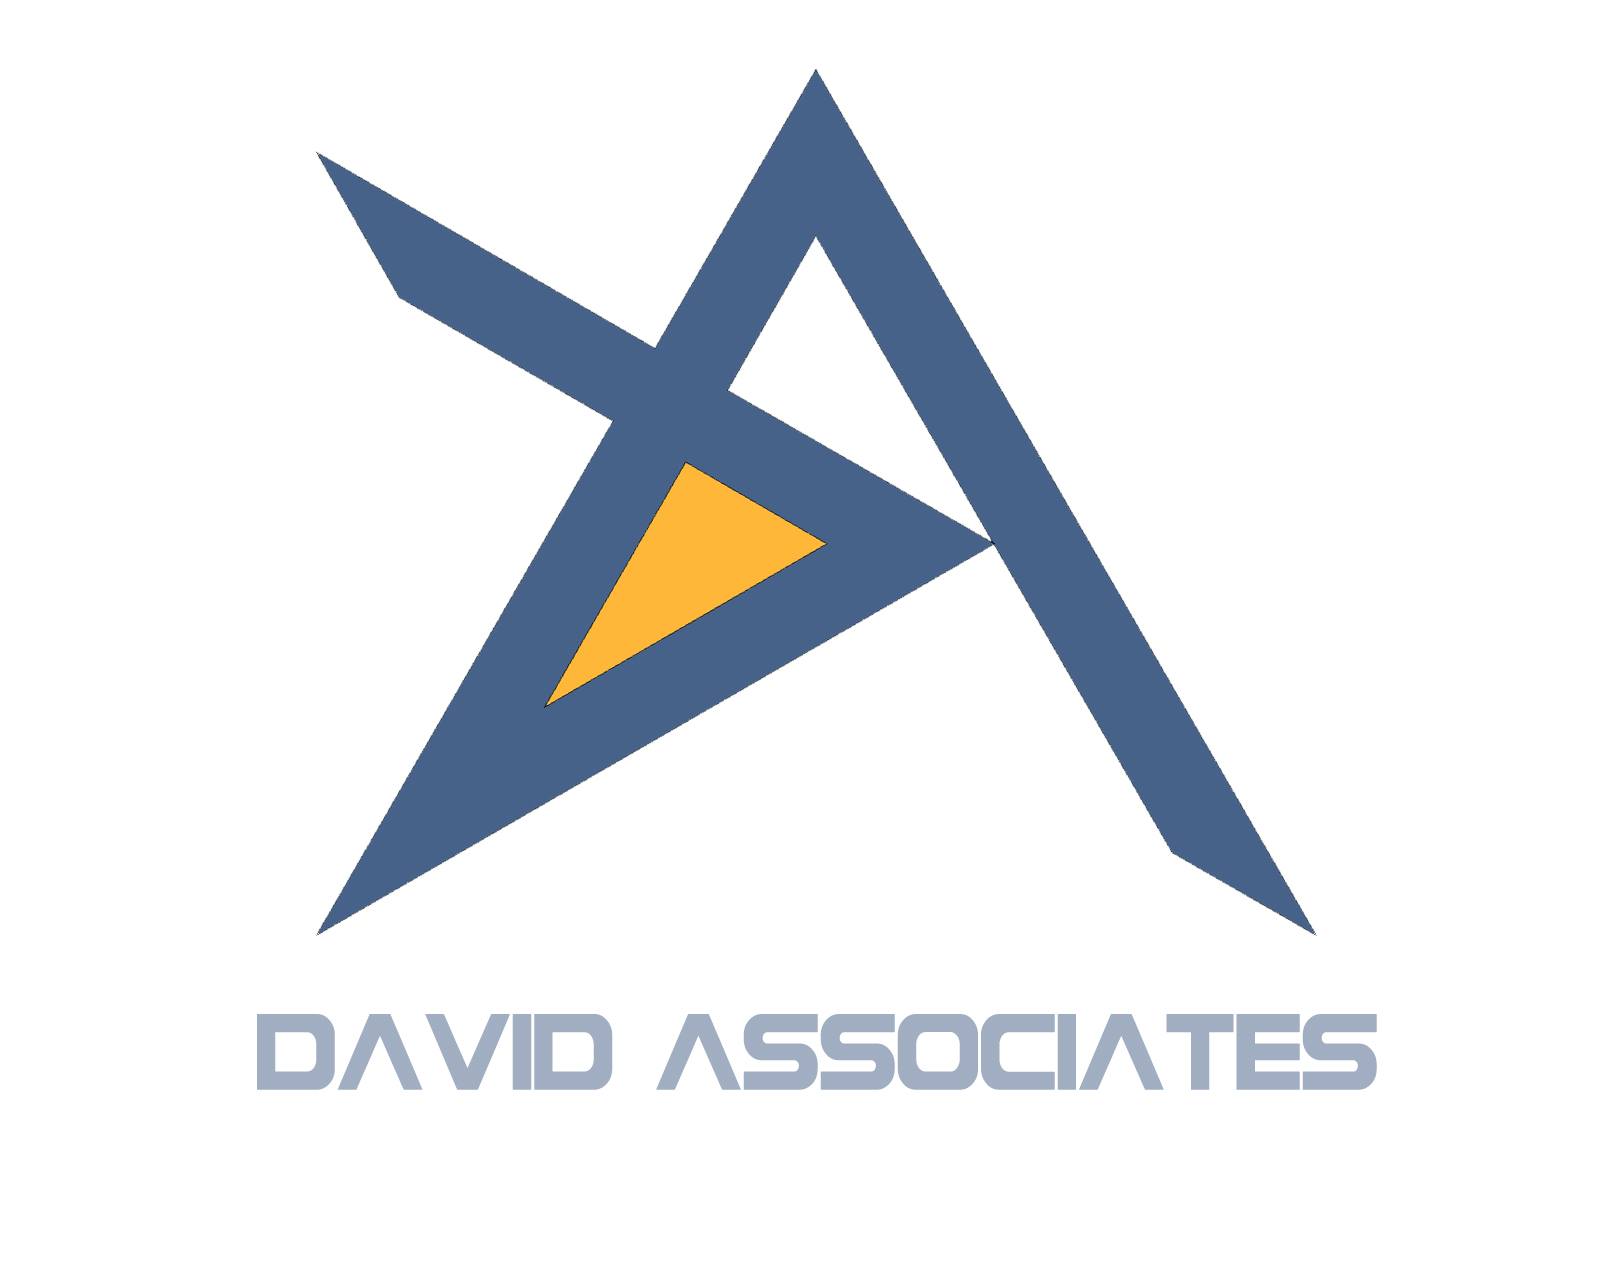 David Associates|IT Services|Professional Services